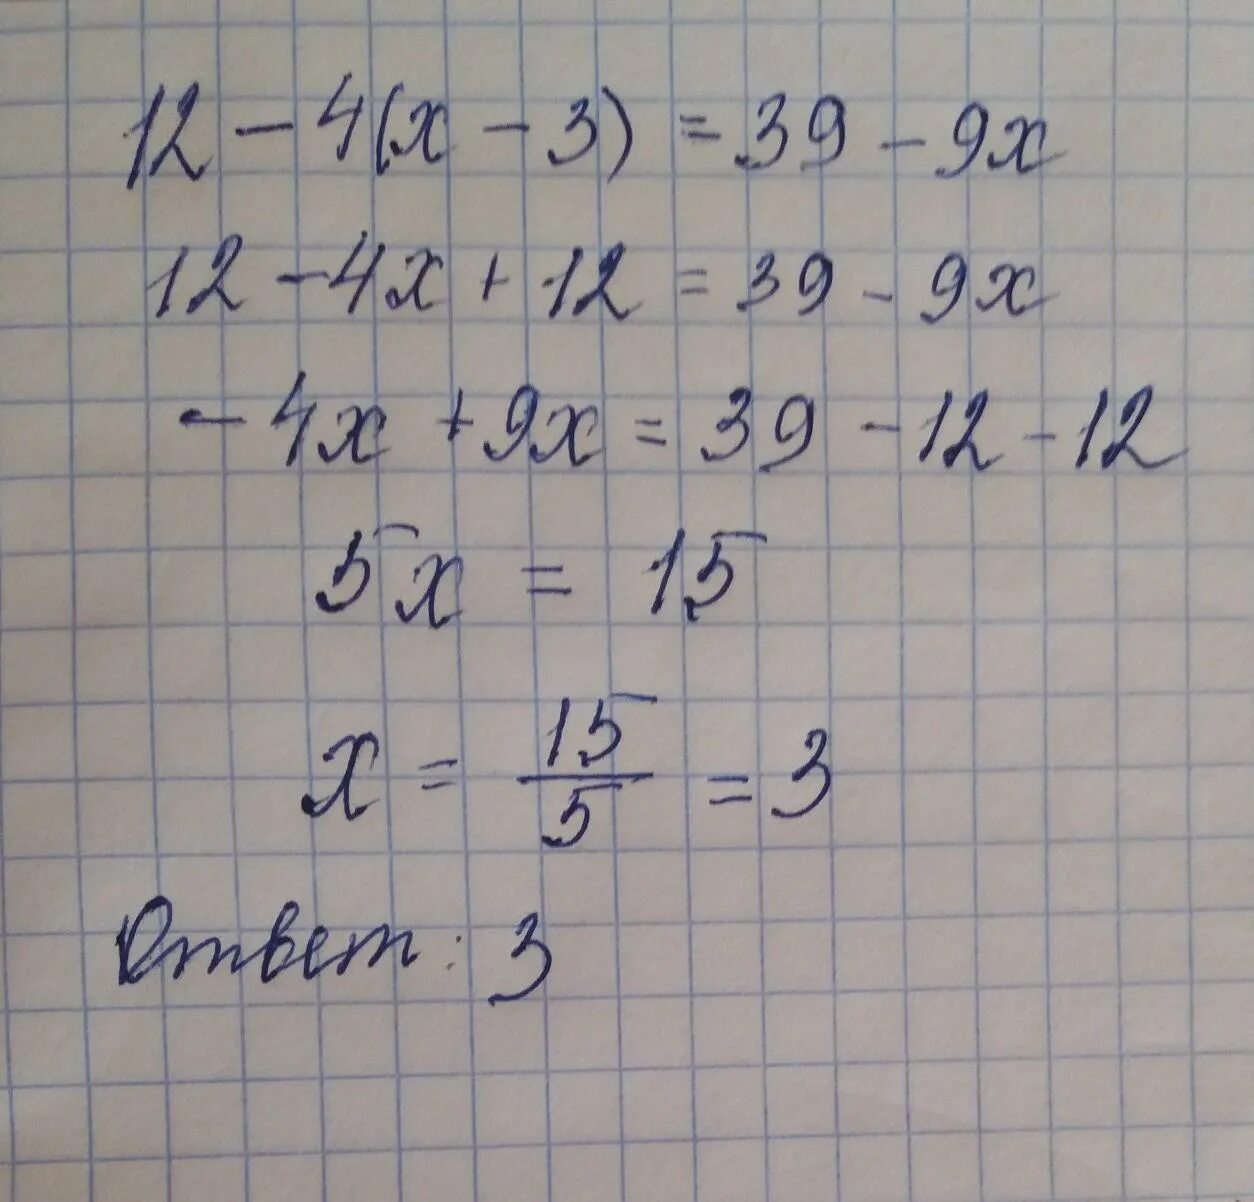 3 4x 12 решение. 12-4(Х-3)=39-9х. 5х 3 12 решение. 3х 4у 12 решение. 4х+12=-4 решение.